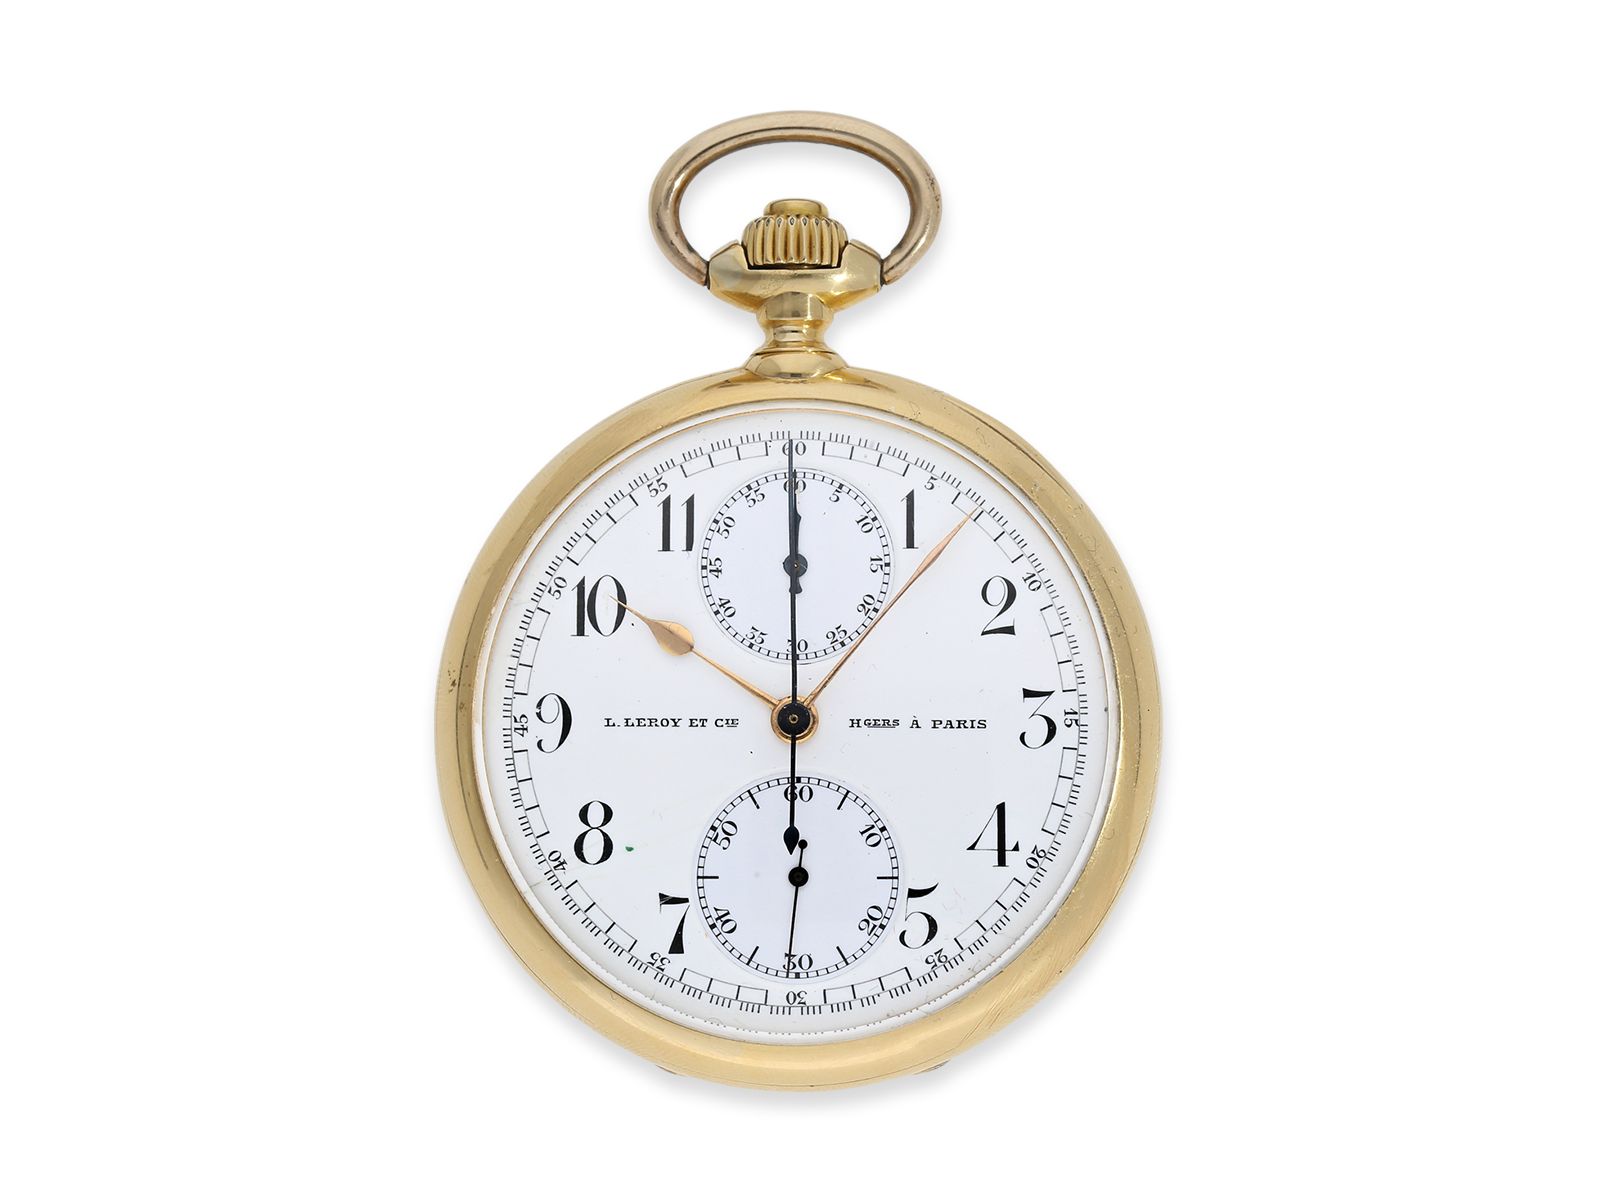 Pocket watch: very rare antimagnetic chronograph in chronometer quality, Ankerchronometer "Chronogra